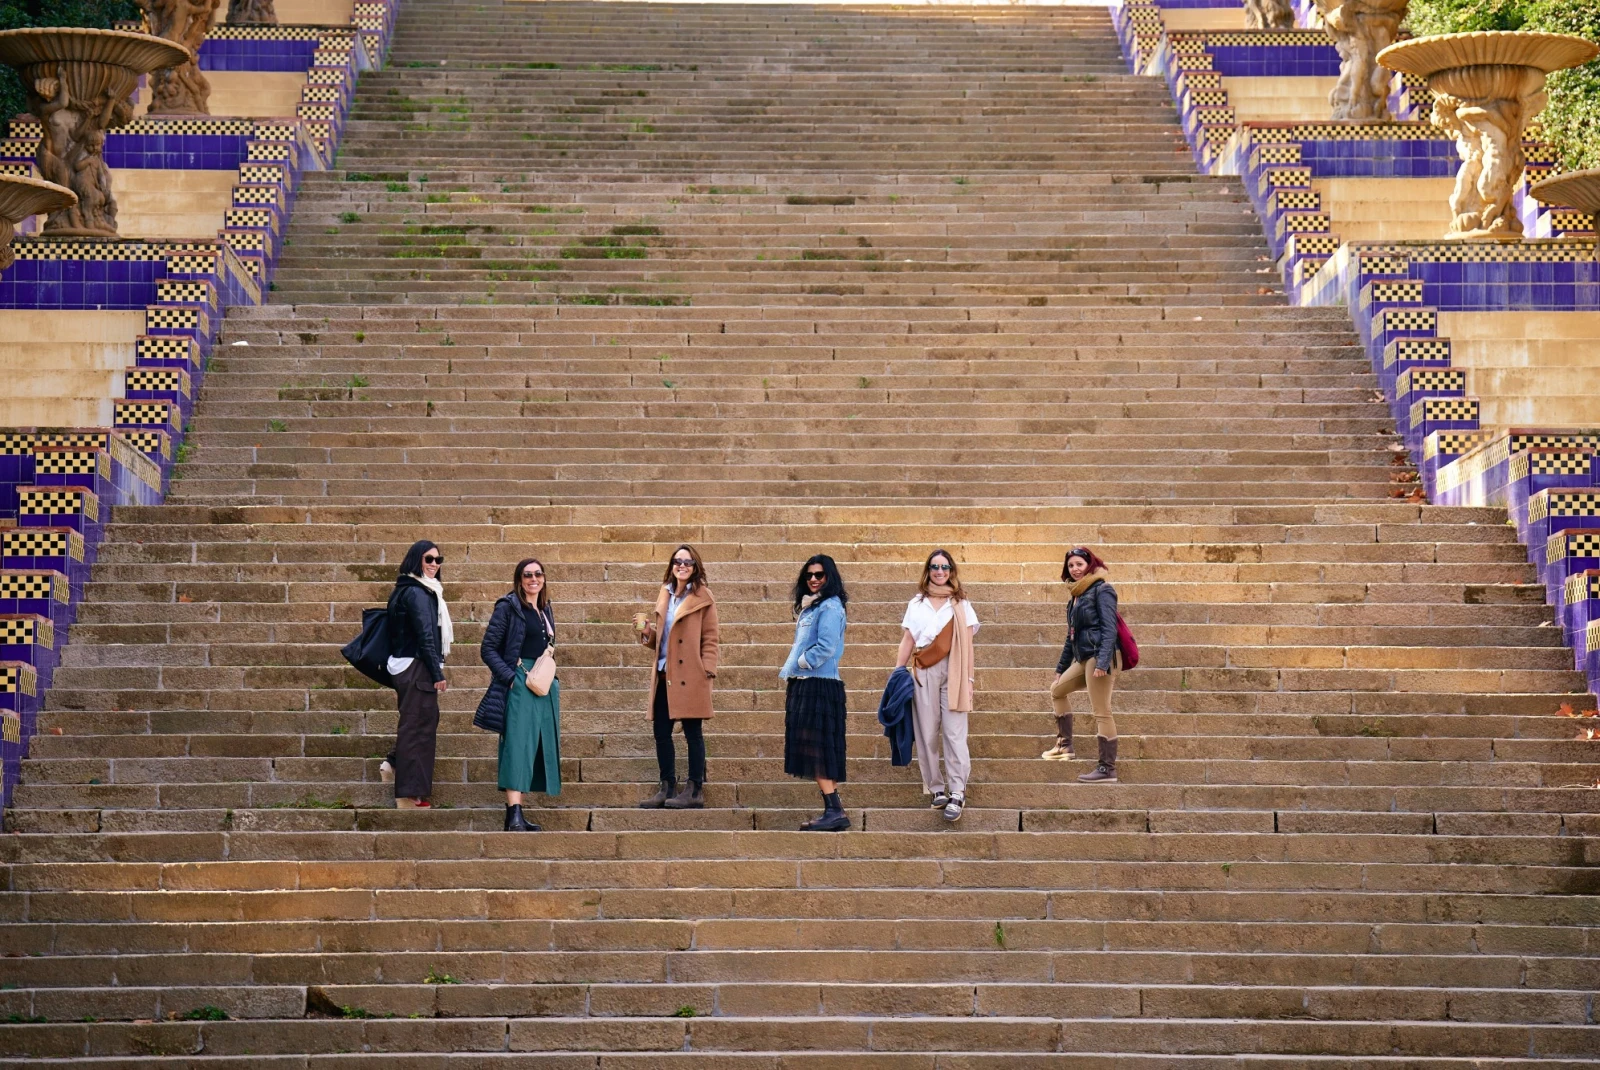 Gaya and friends posing on steps